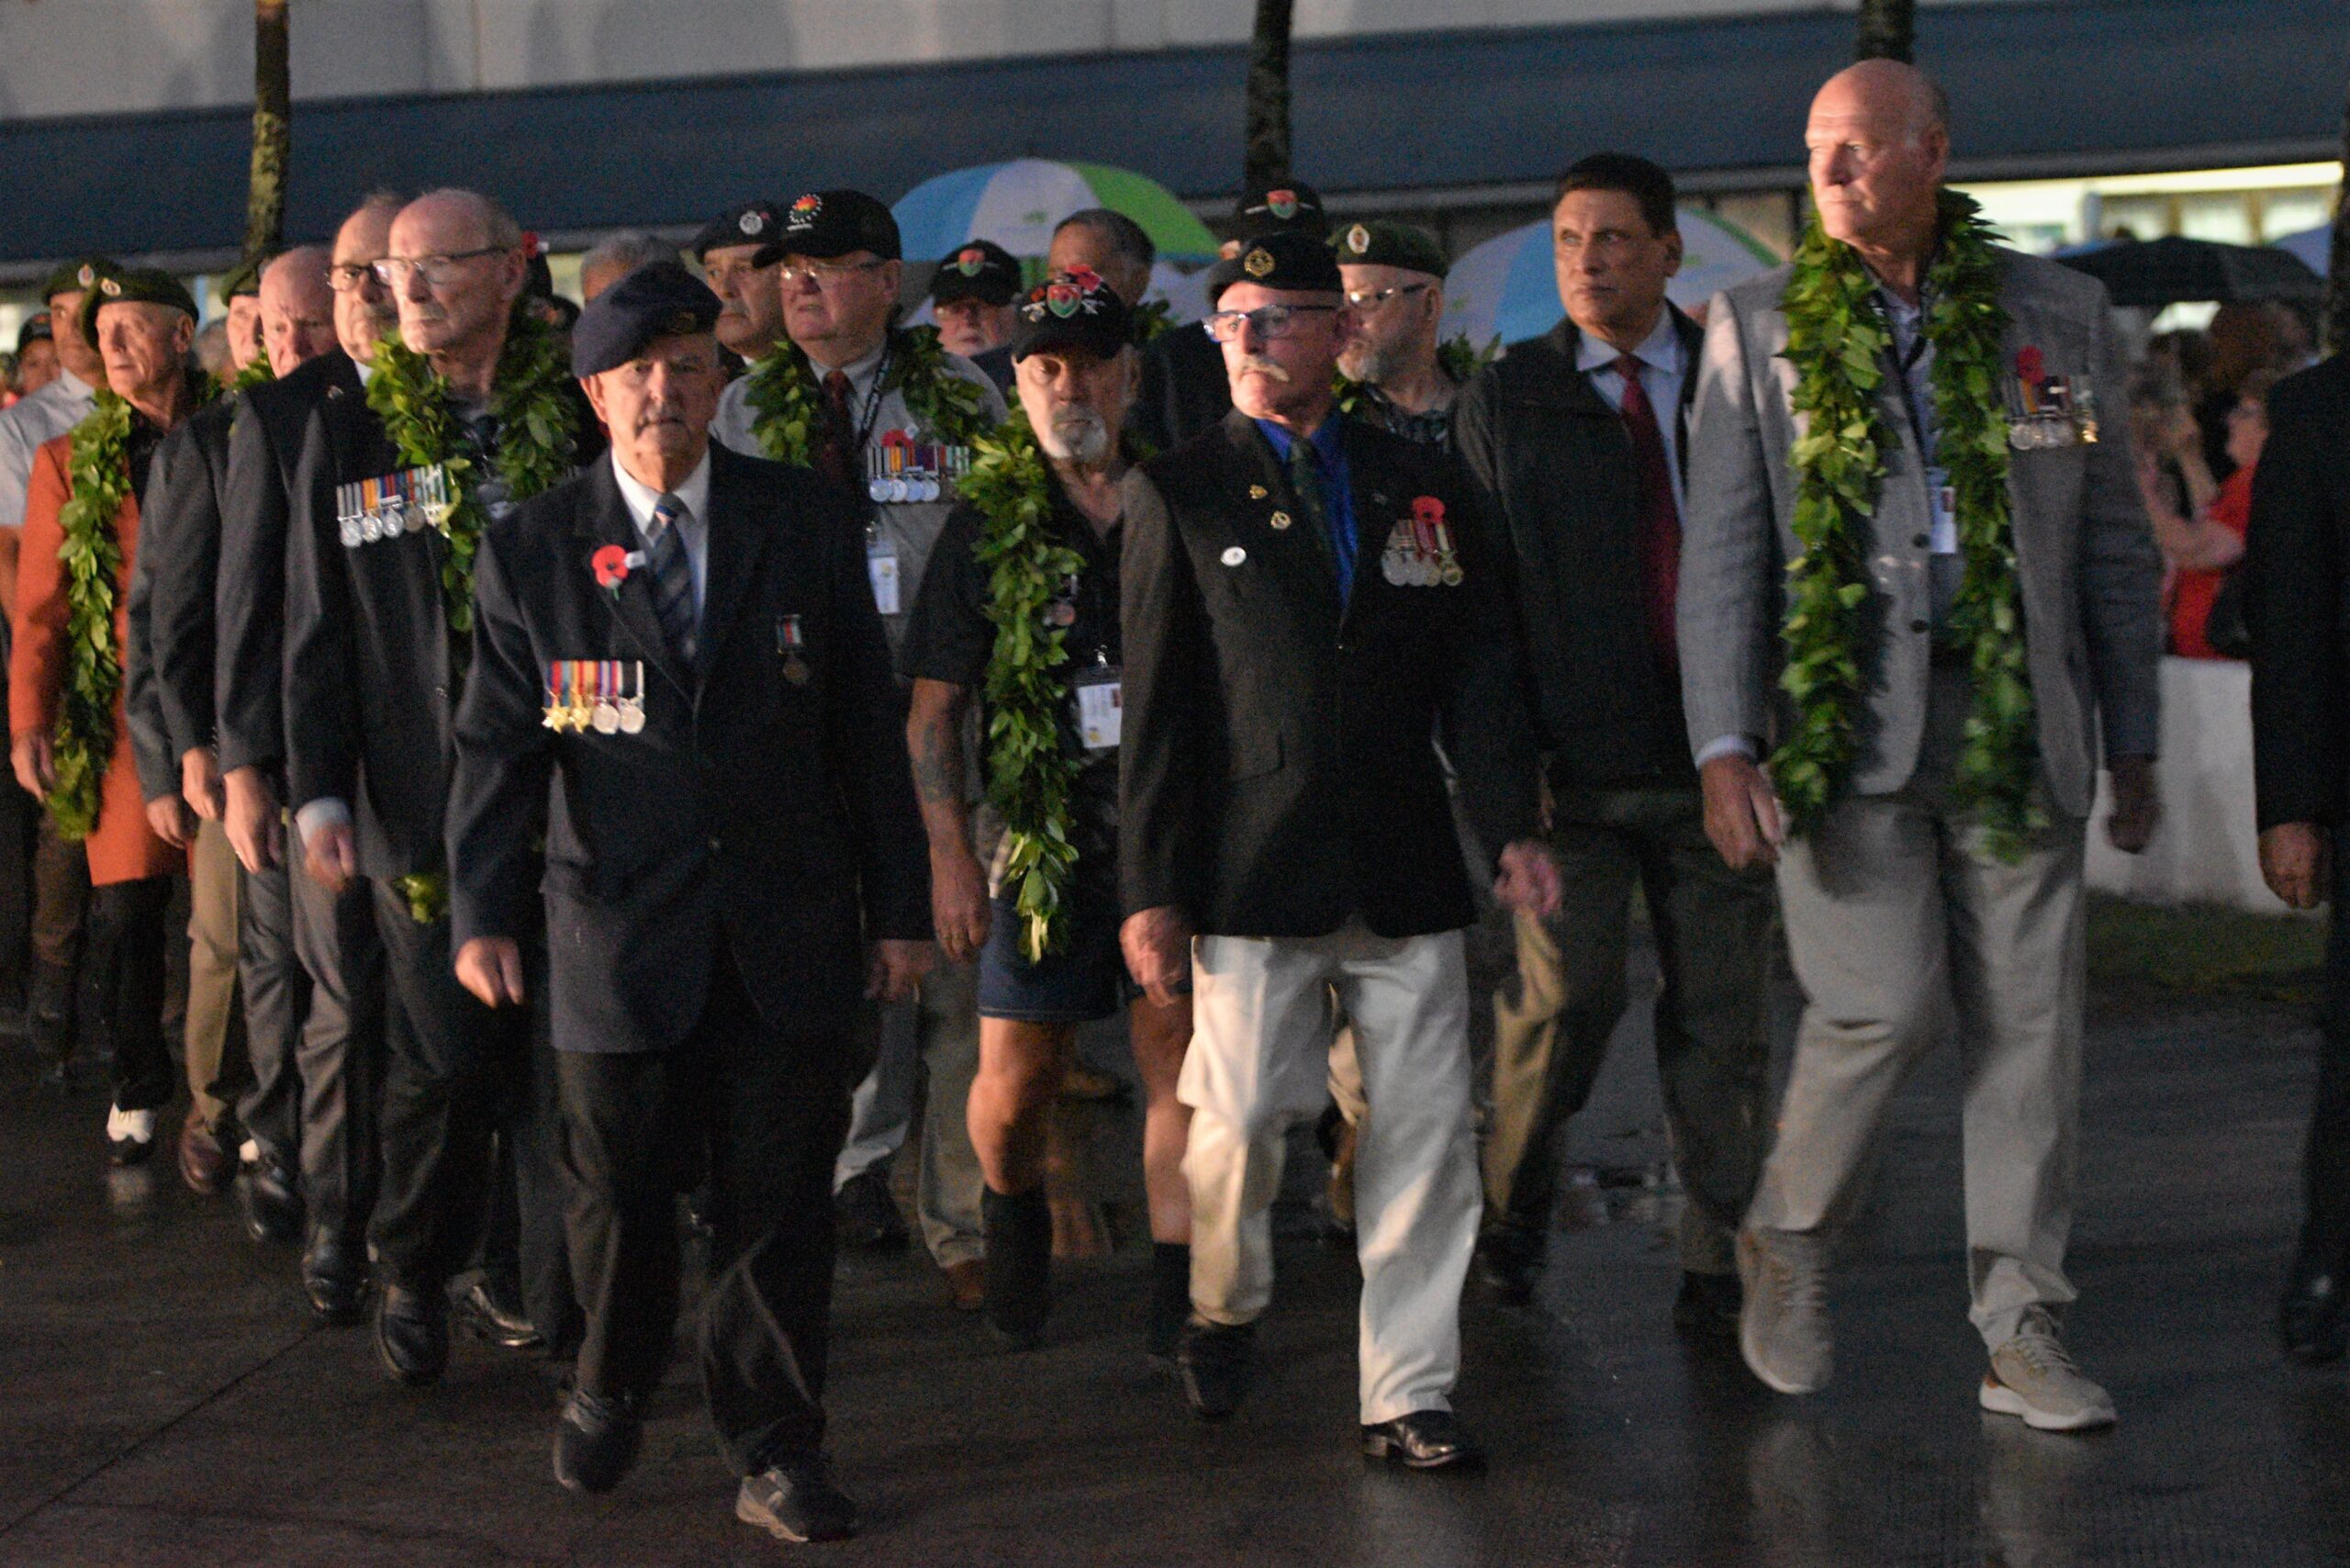 Veterans reflect on sacrifice and camaraderie at Anzac Dawn Parade